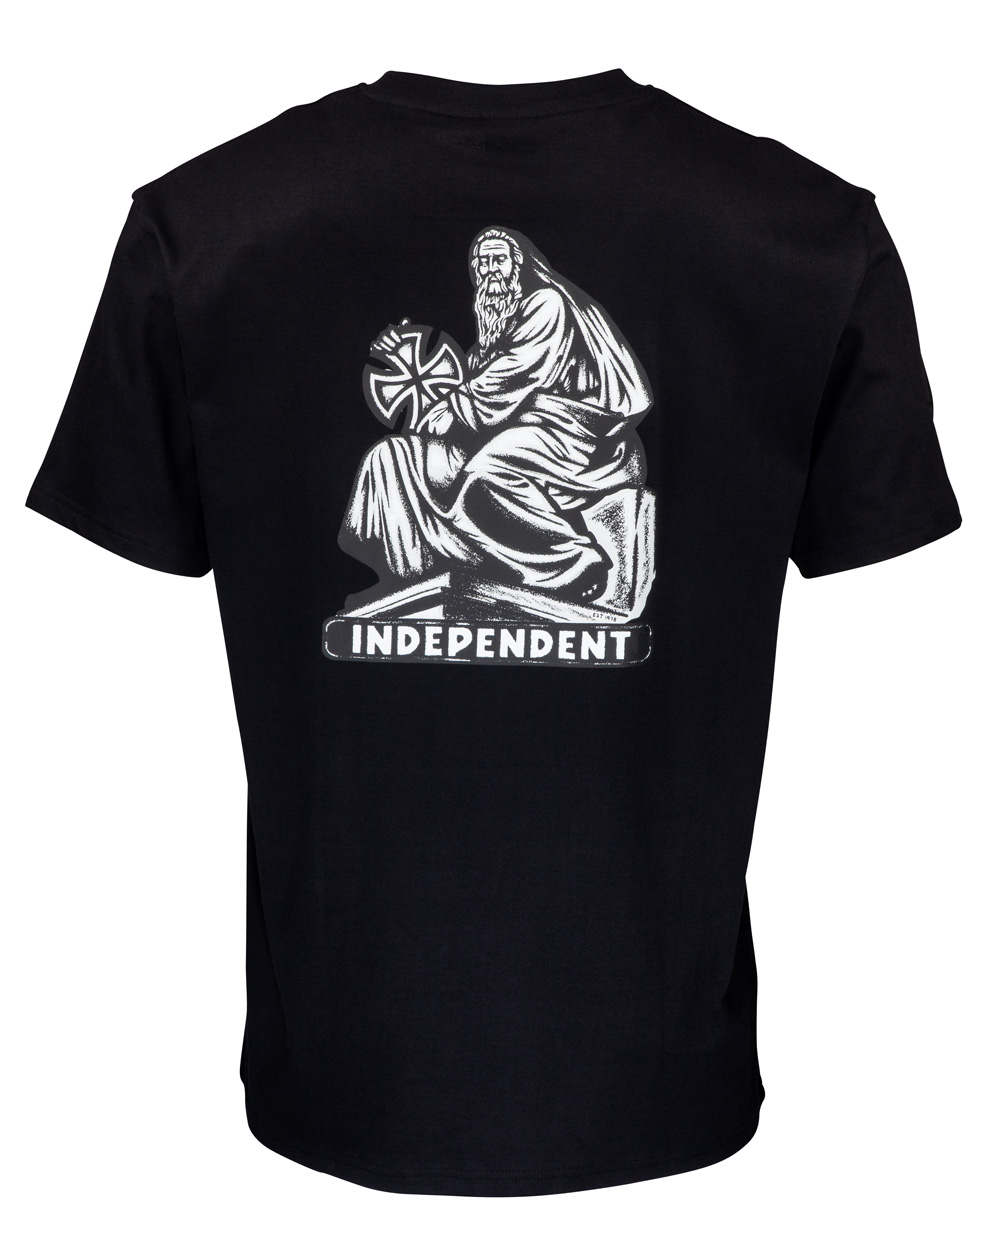 Independent Men's T-Shirt Set In Stone Black